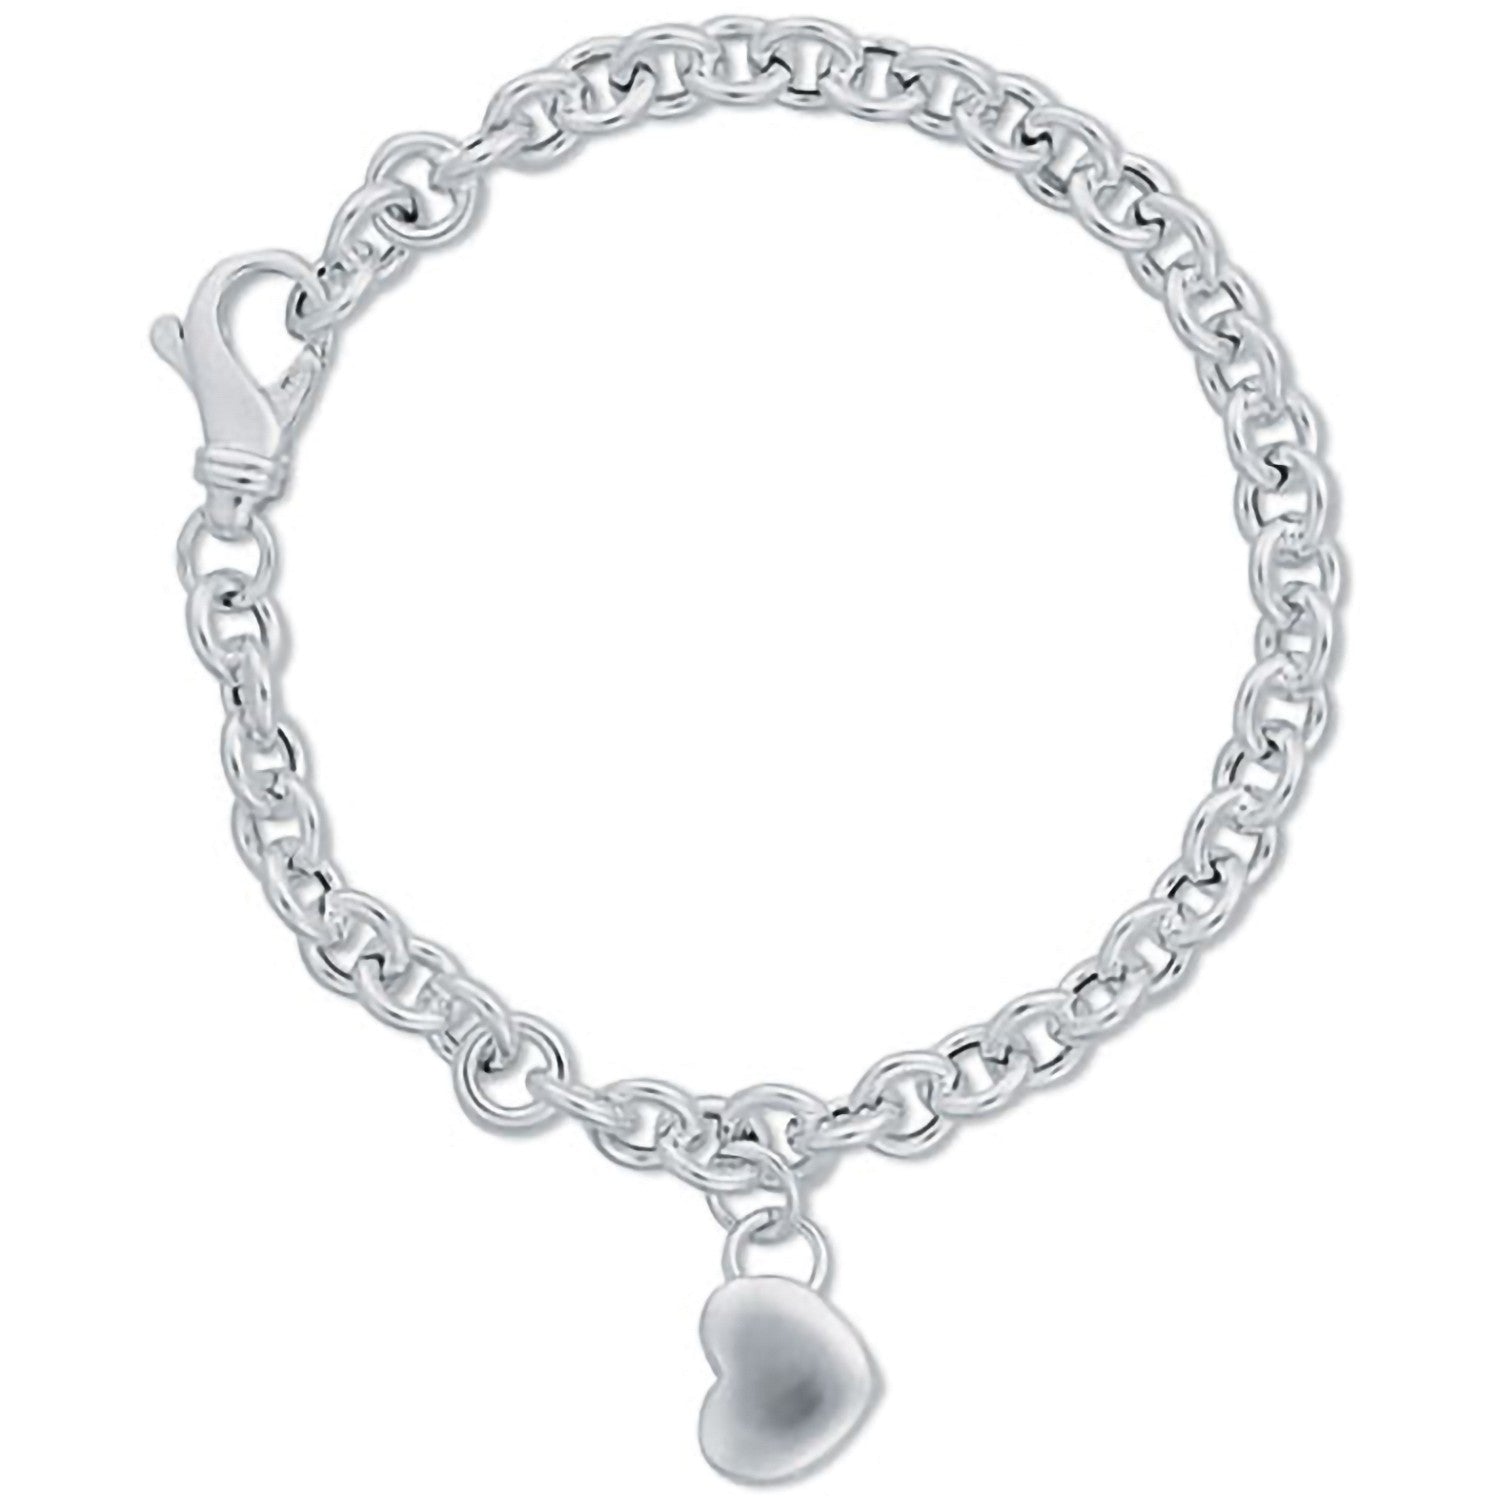 925 Sterling Silver Adorable Heart Charm Bracelet - FJewellery